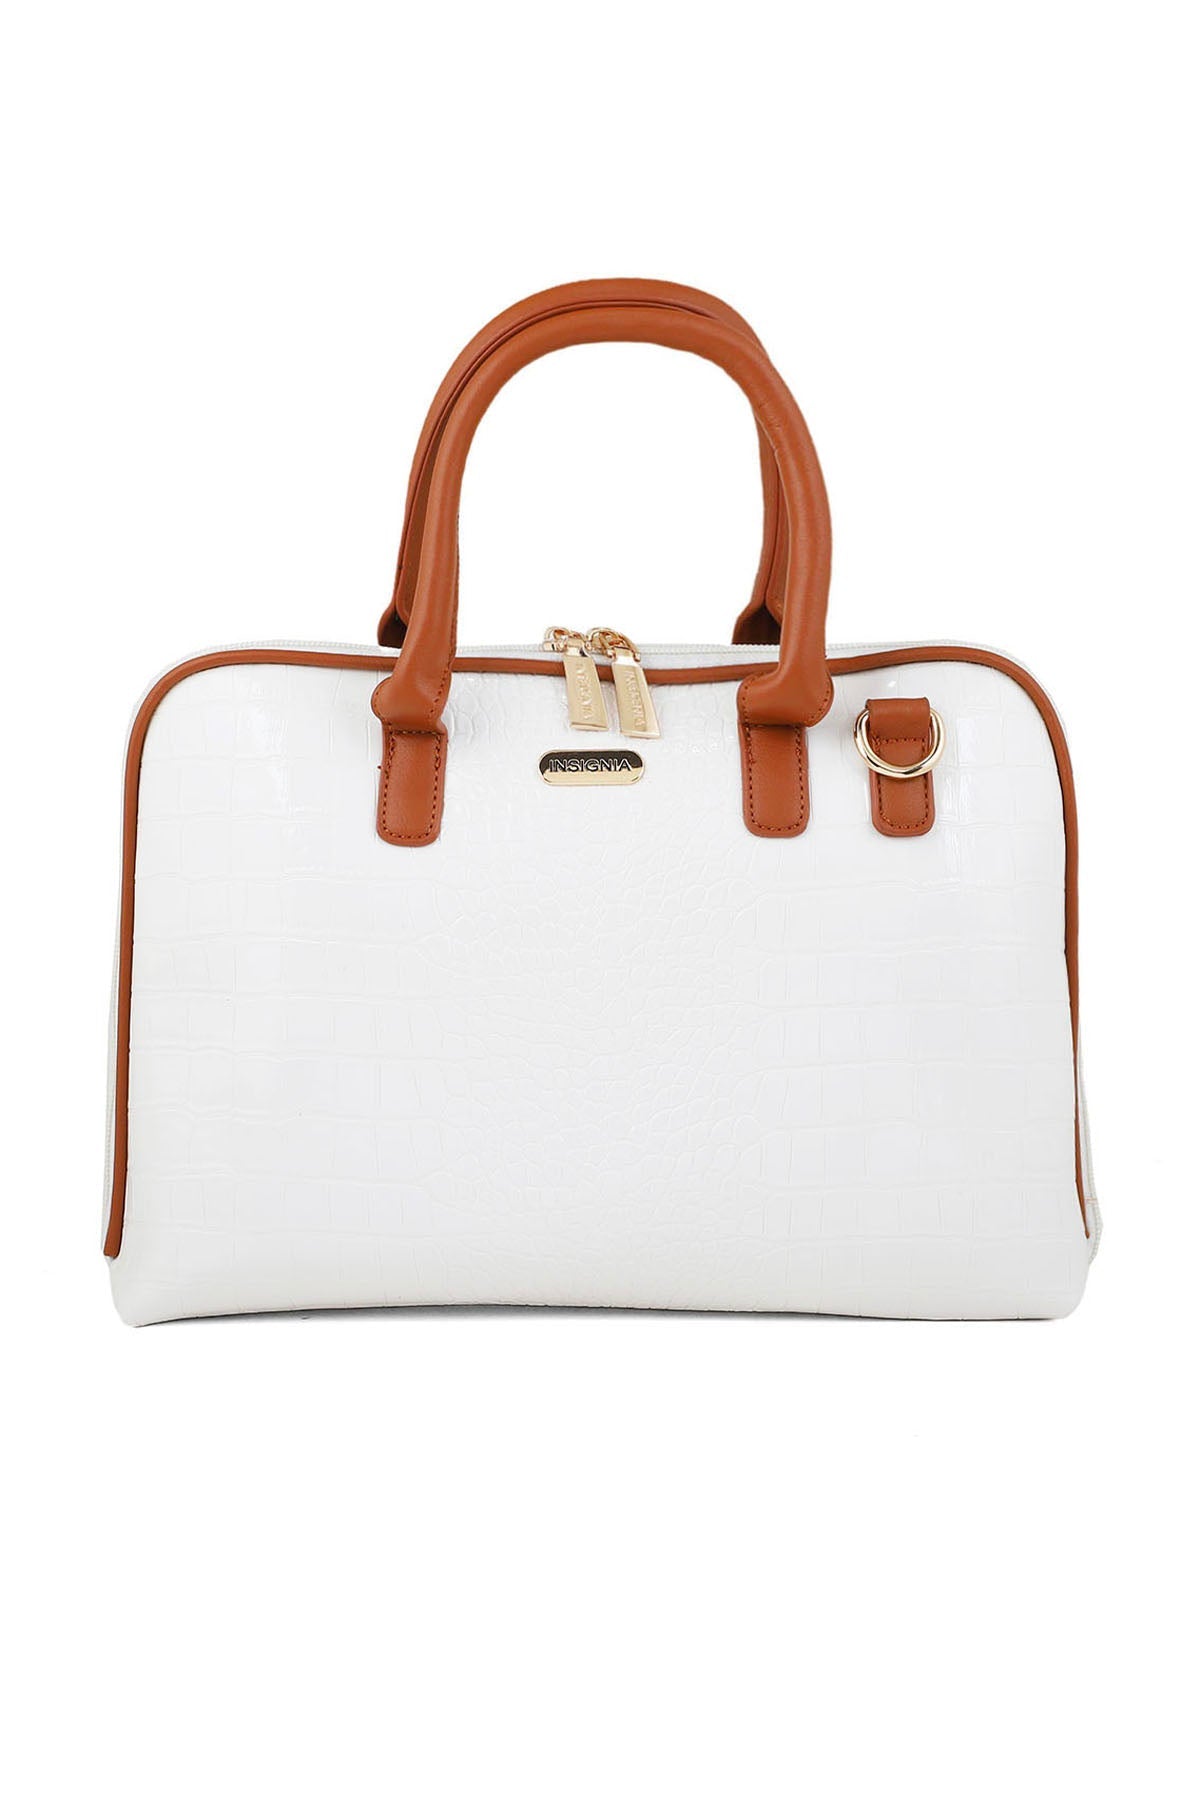 Top Handle Hand Bags B15046-Brown